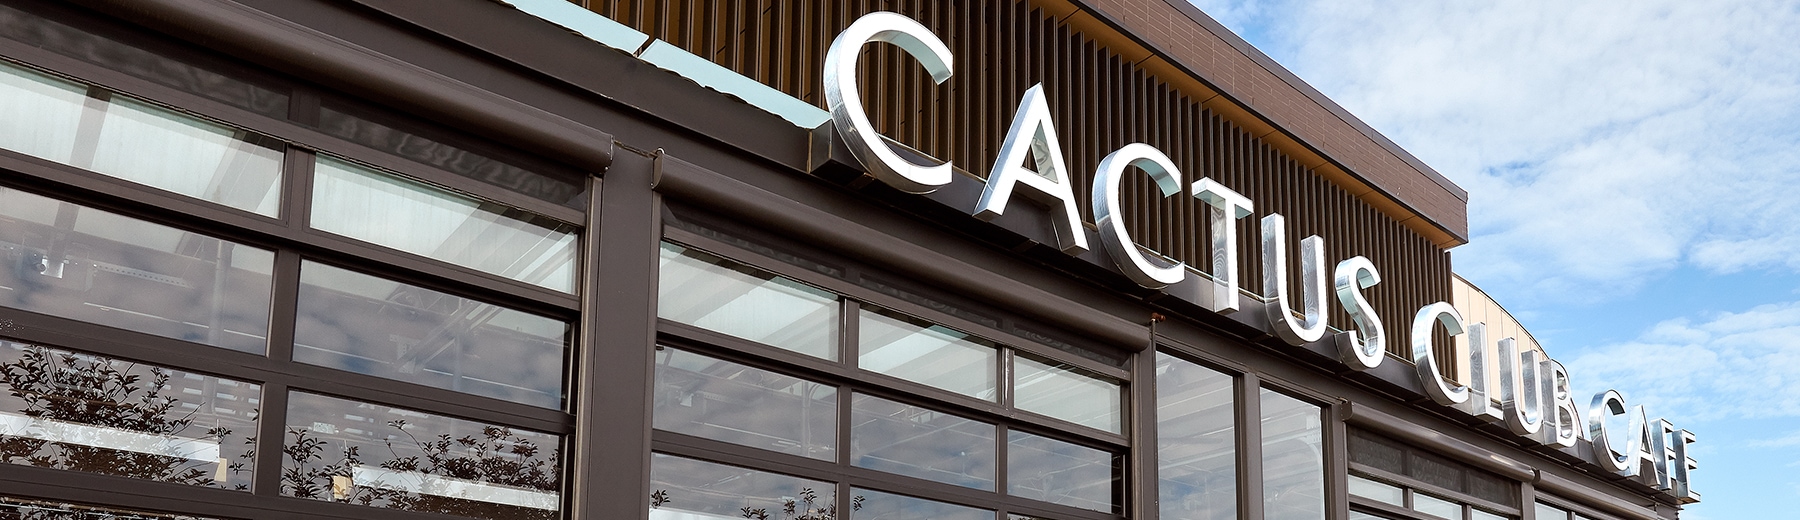 Cactus Club Cafe West Edmonton mall